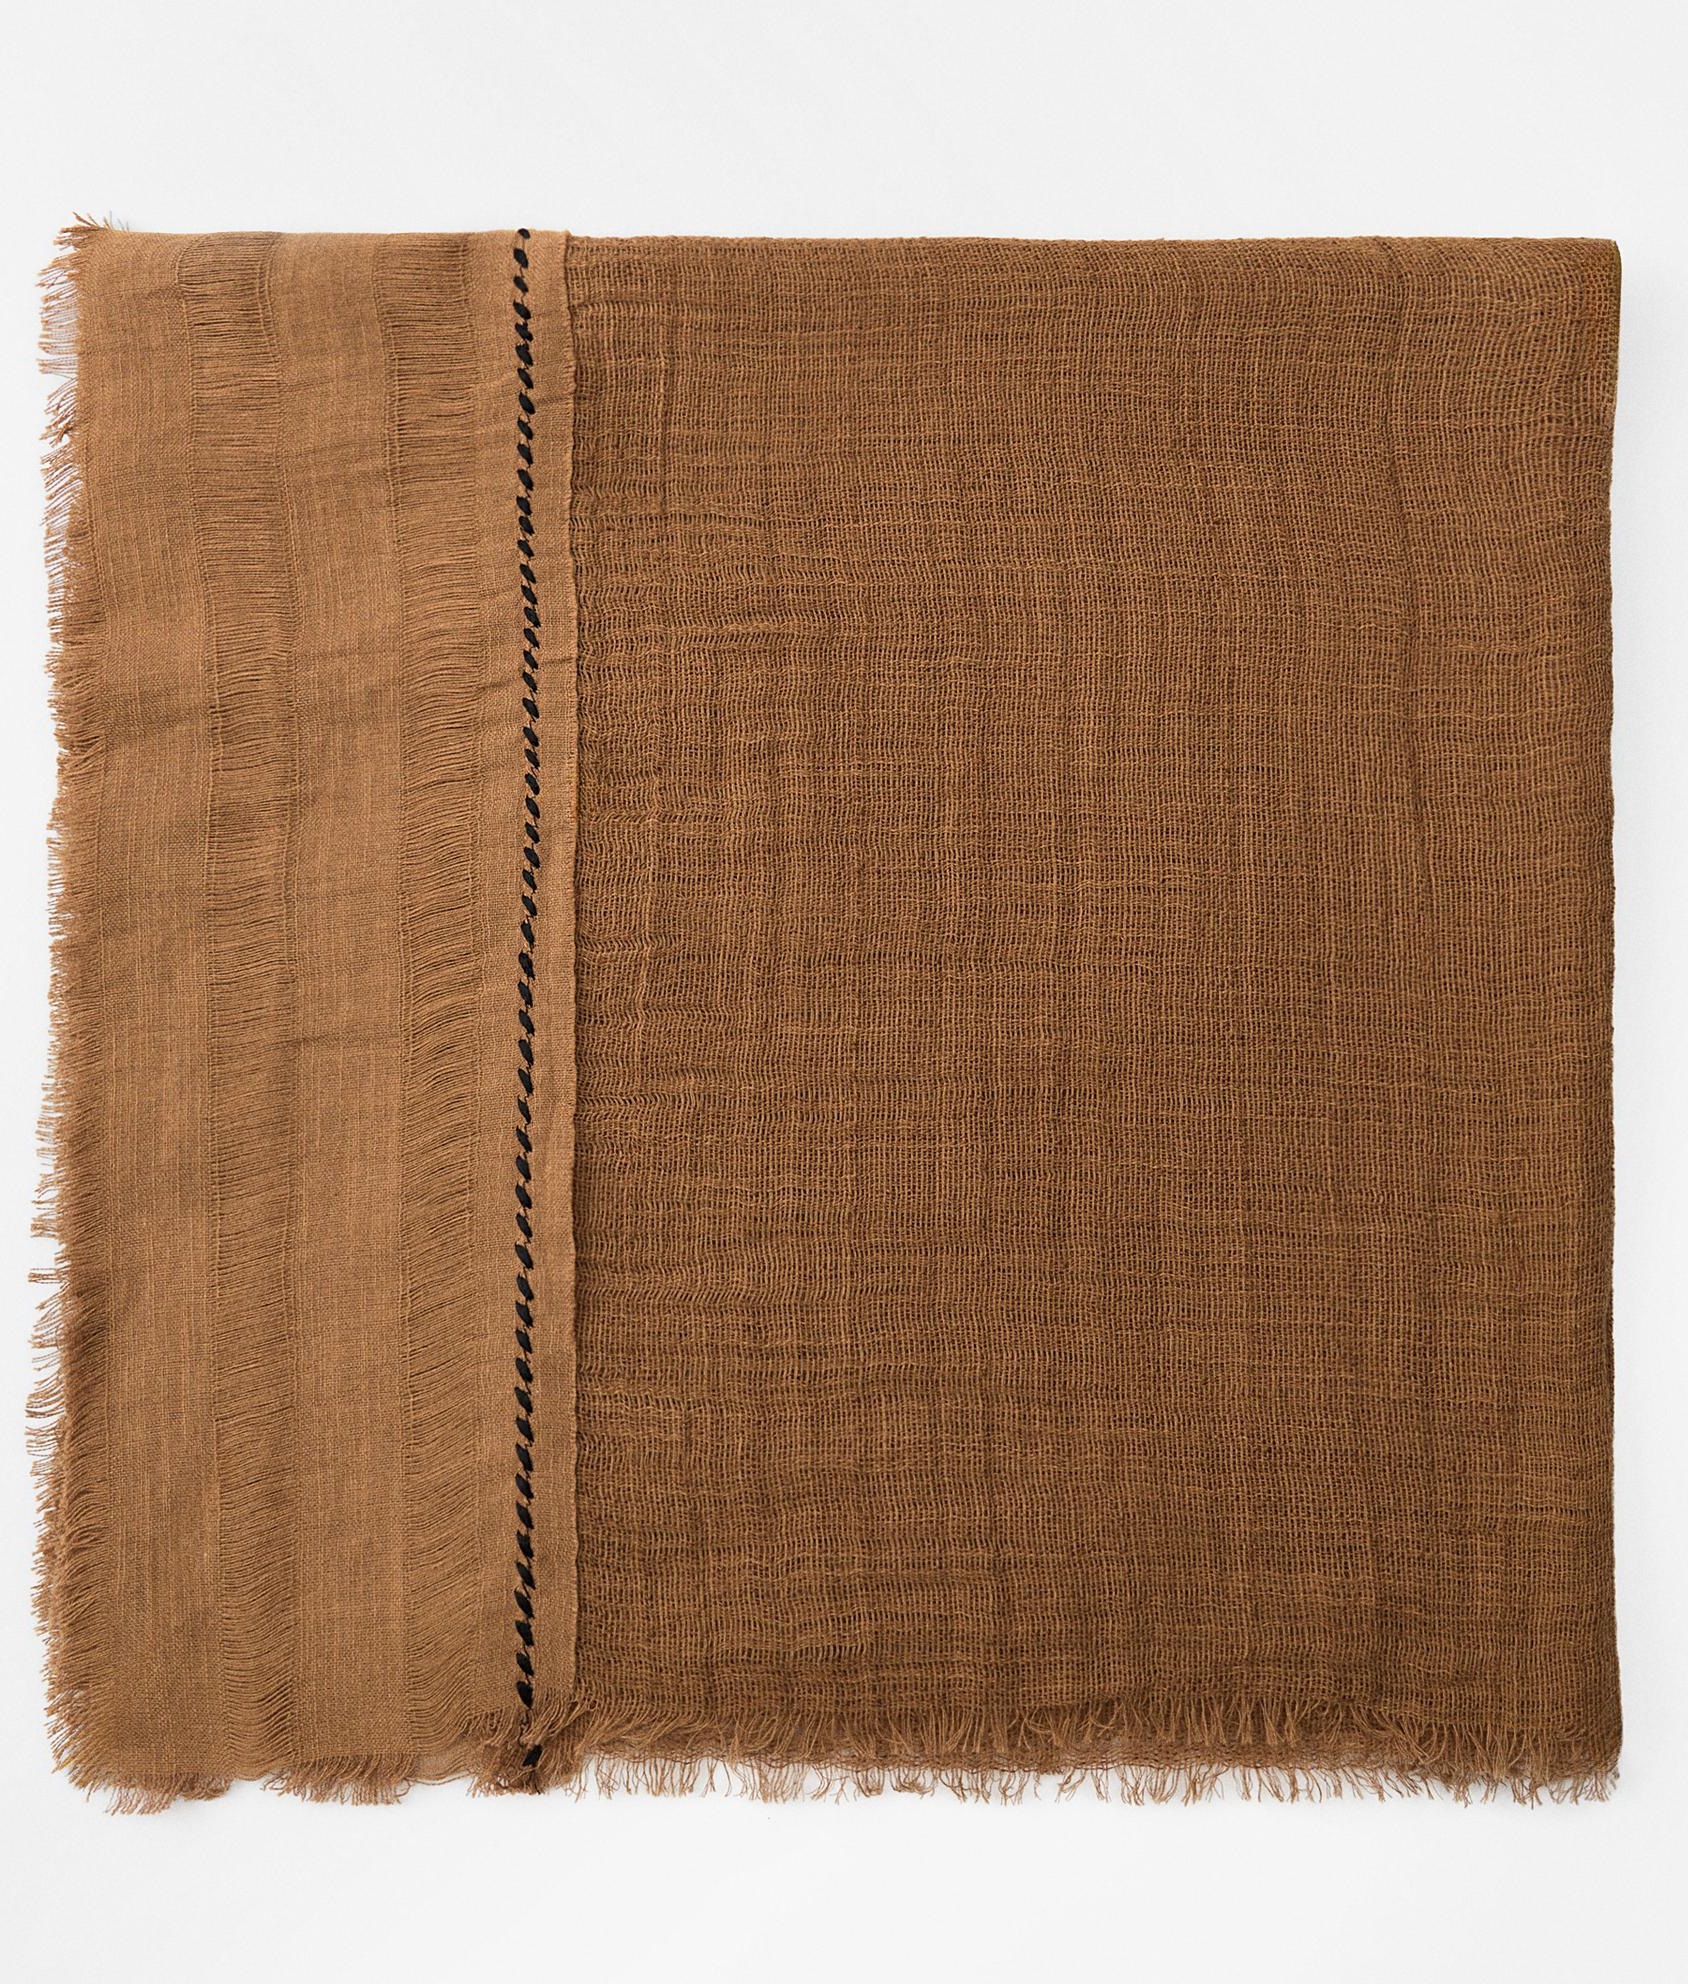 Шарф Zara Linen Blend With Topstitching, коричневый рубашка zara linen blend with vents серый